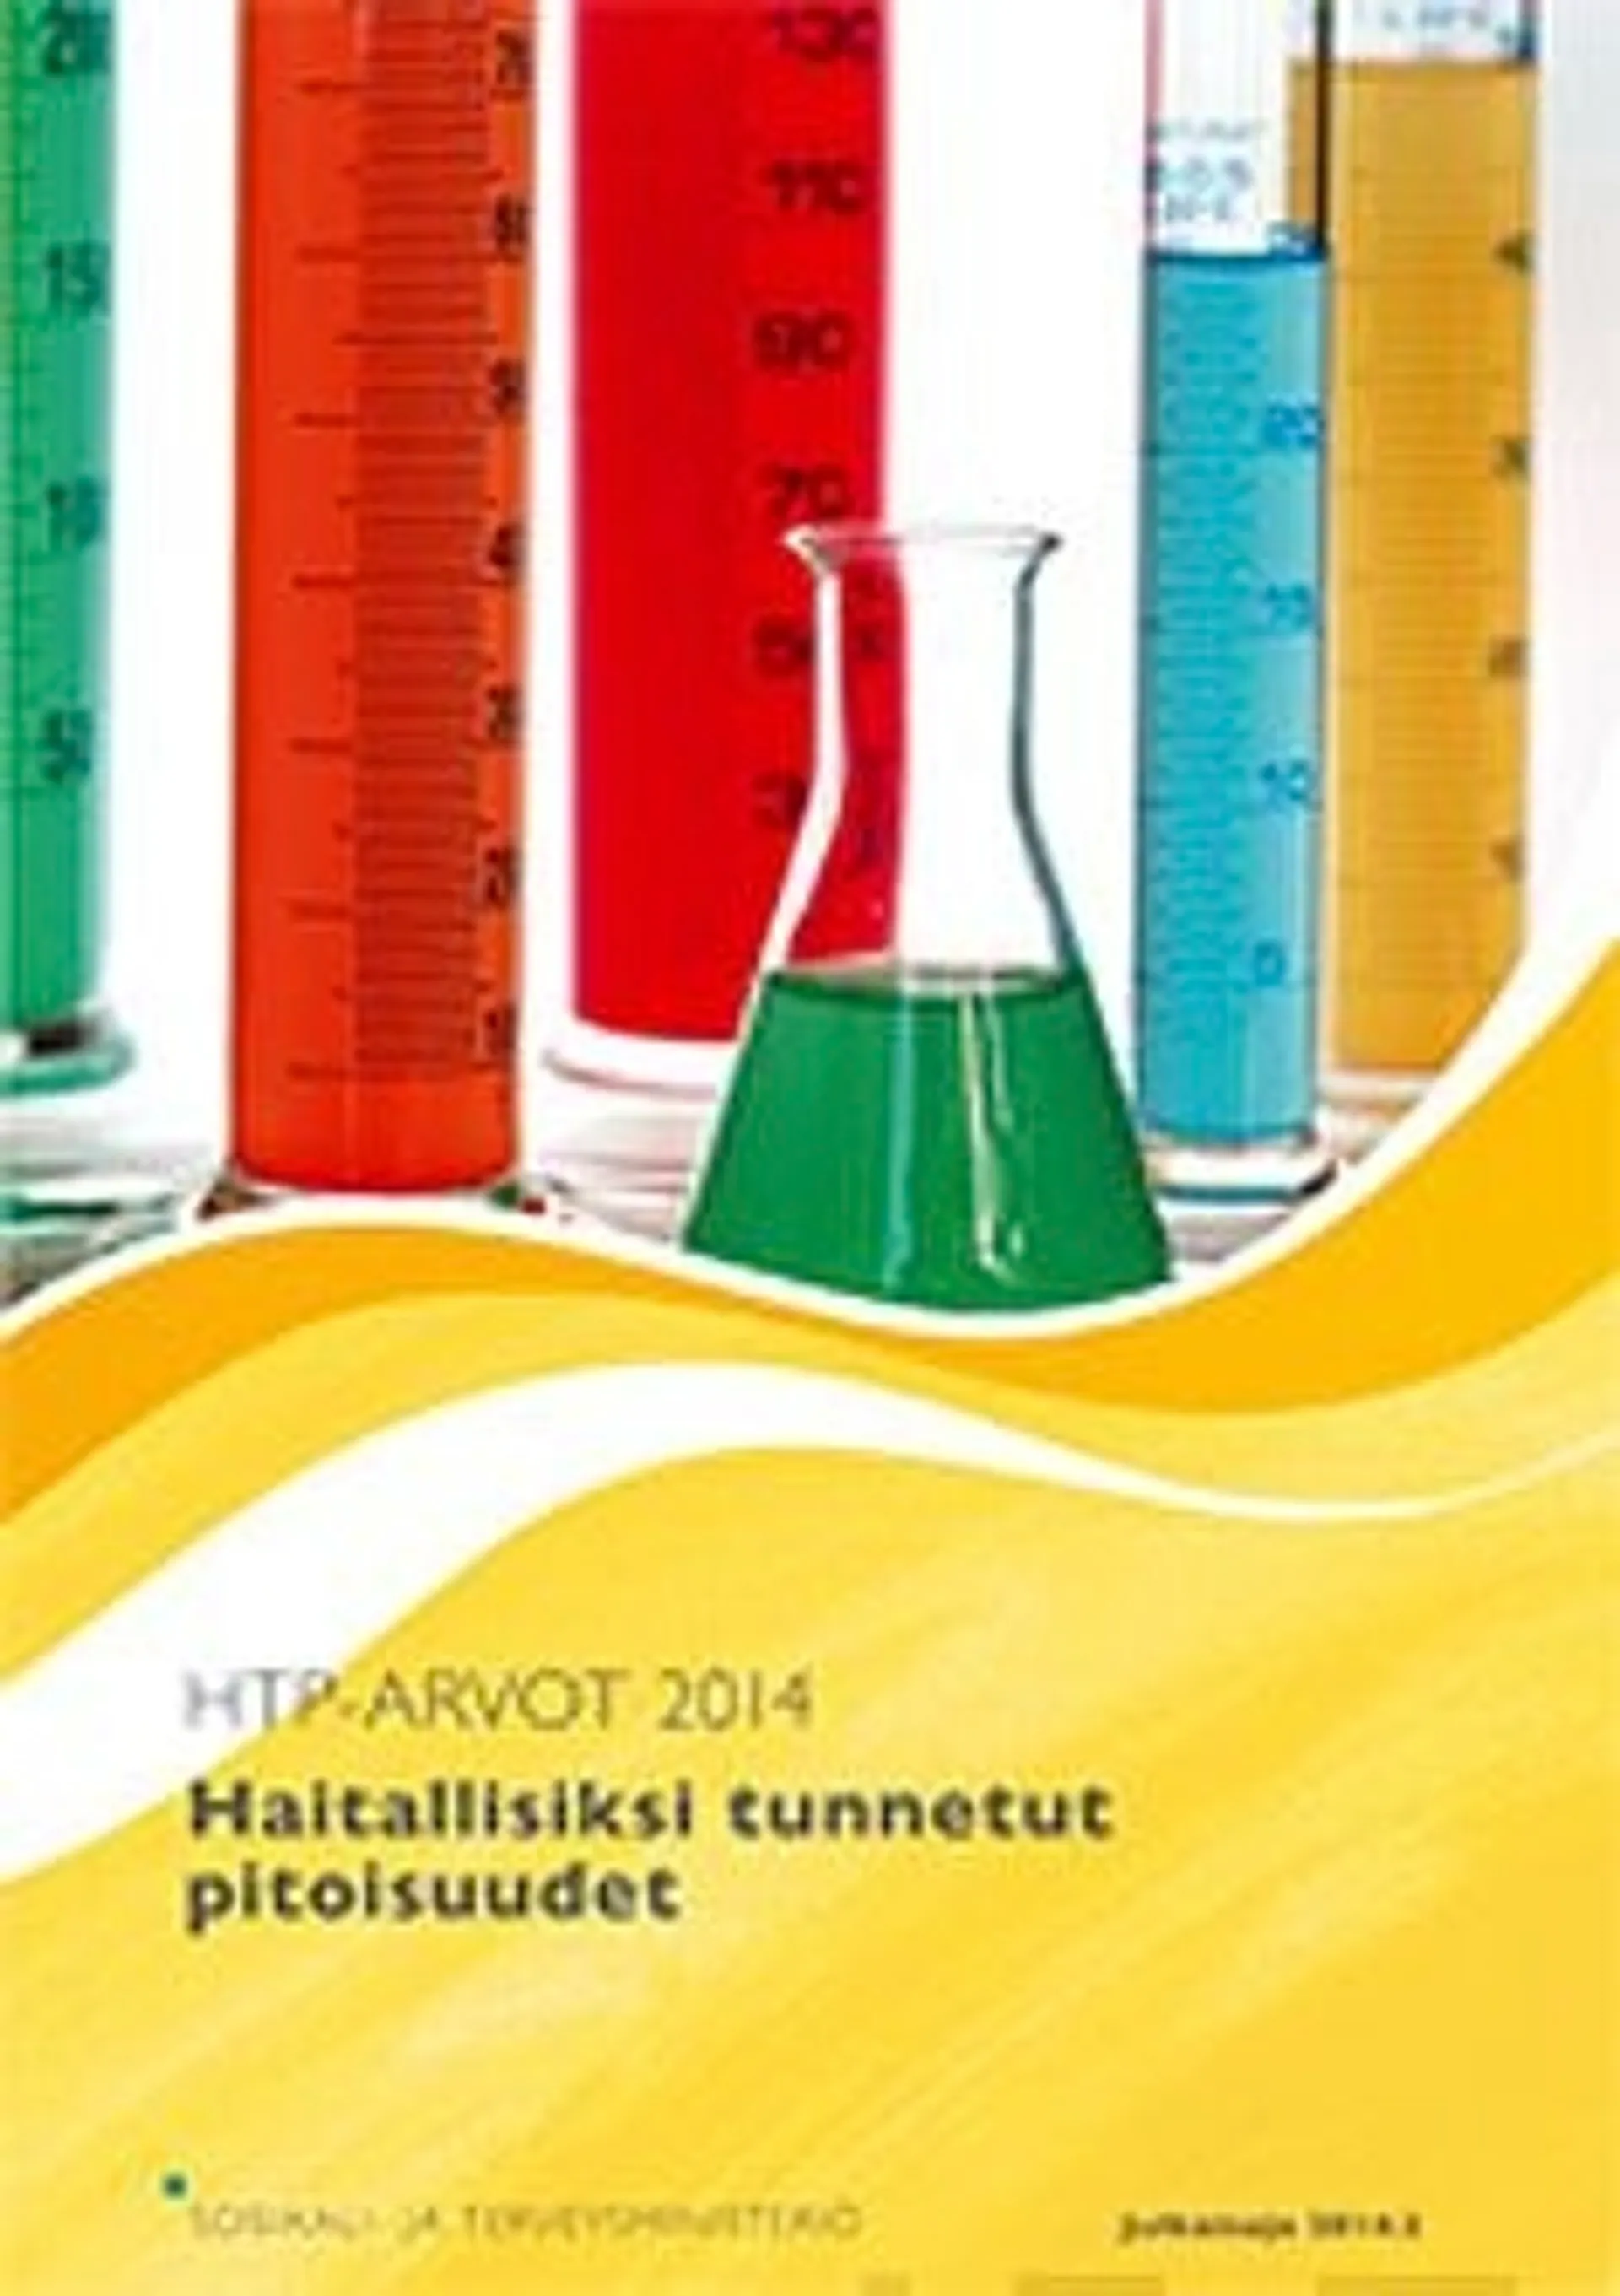 HTP-arvot 2014